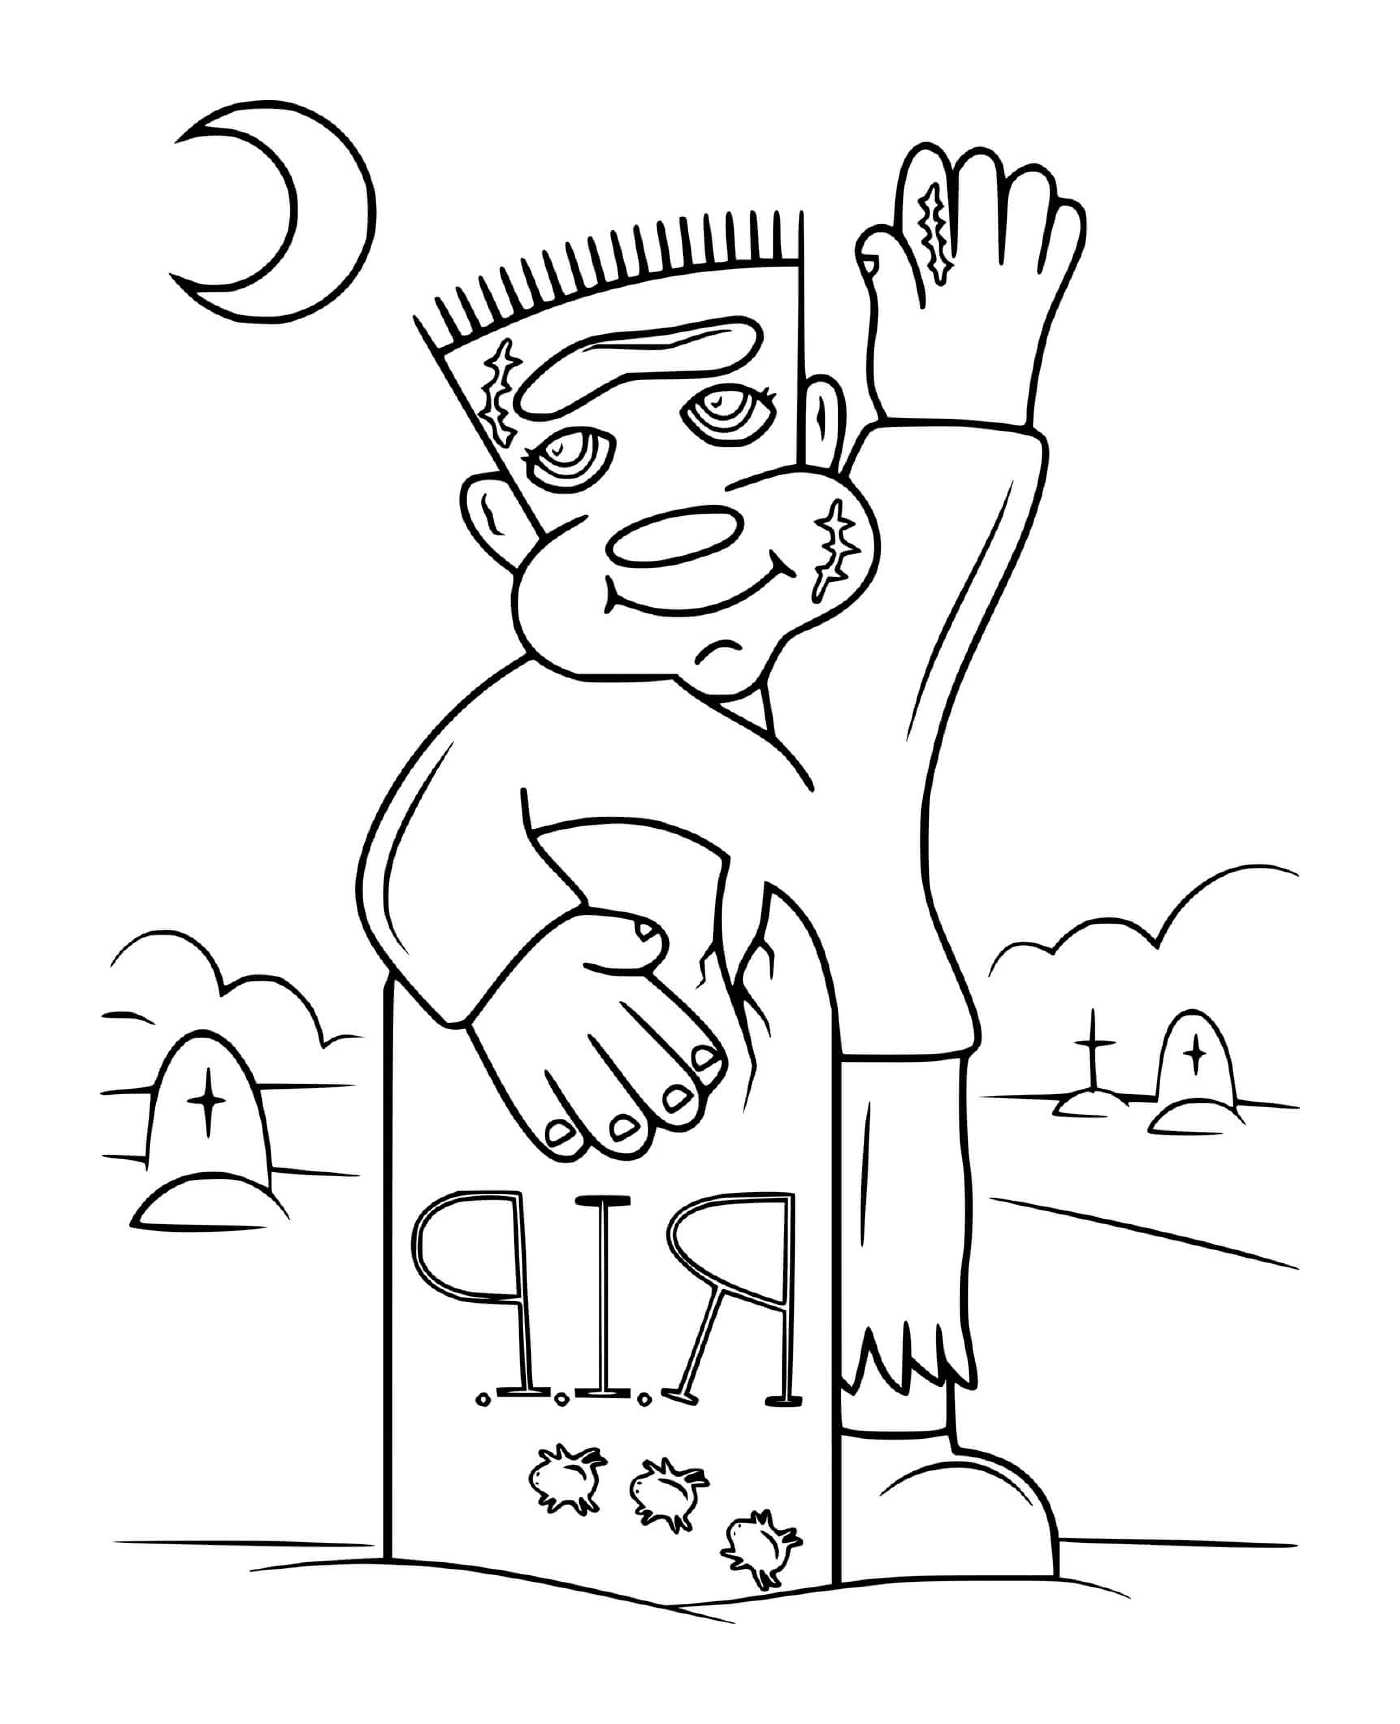   Frankenstein devant une tombe 